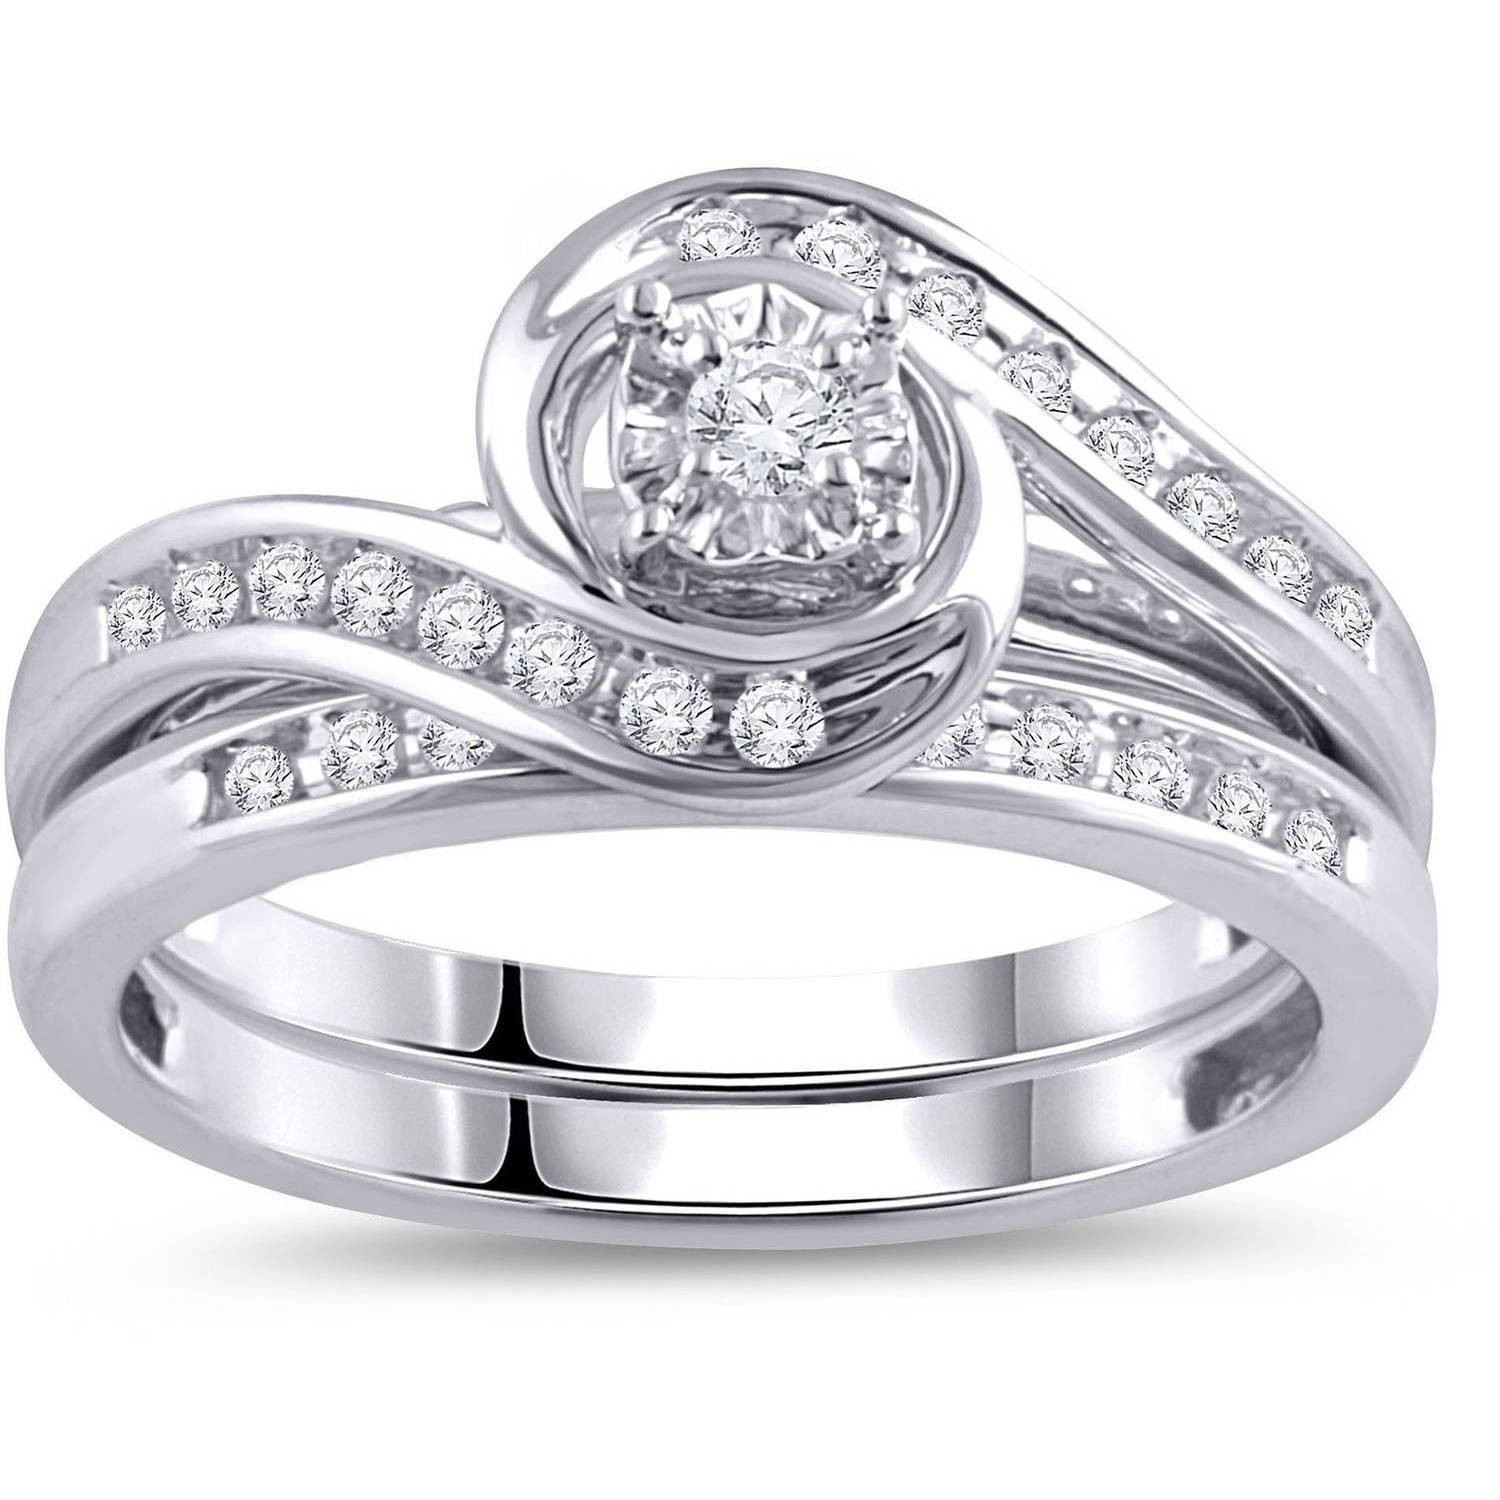 Diamond Rings At Walmart
 15 Ideas of Walmart Jewelry Men s Wedding Bands